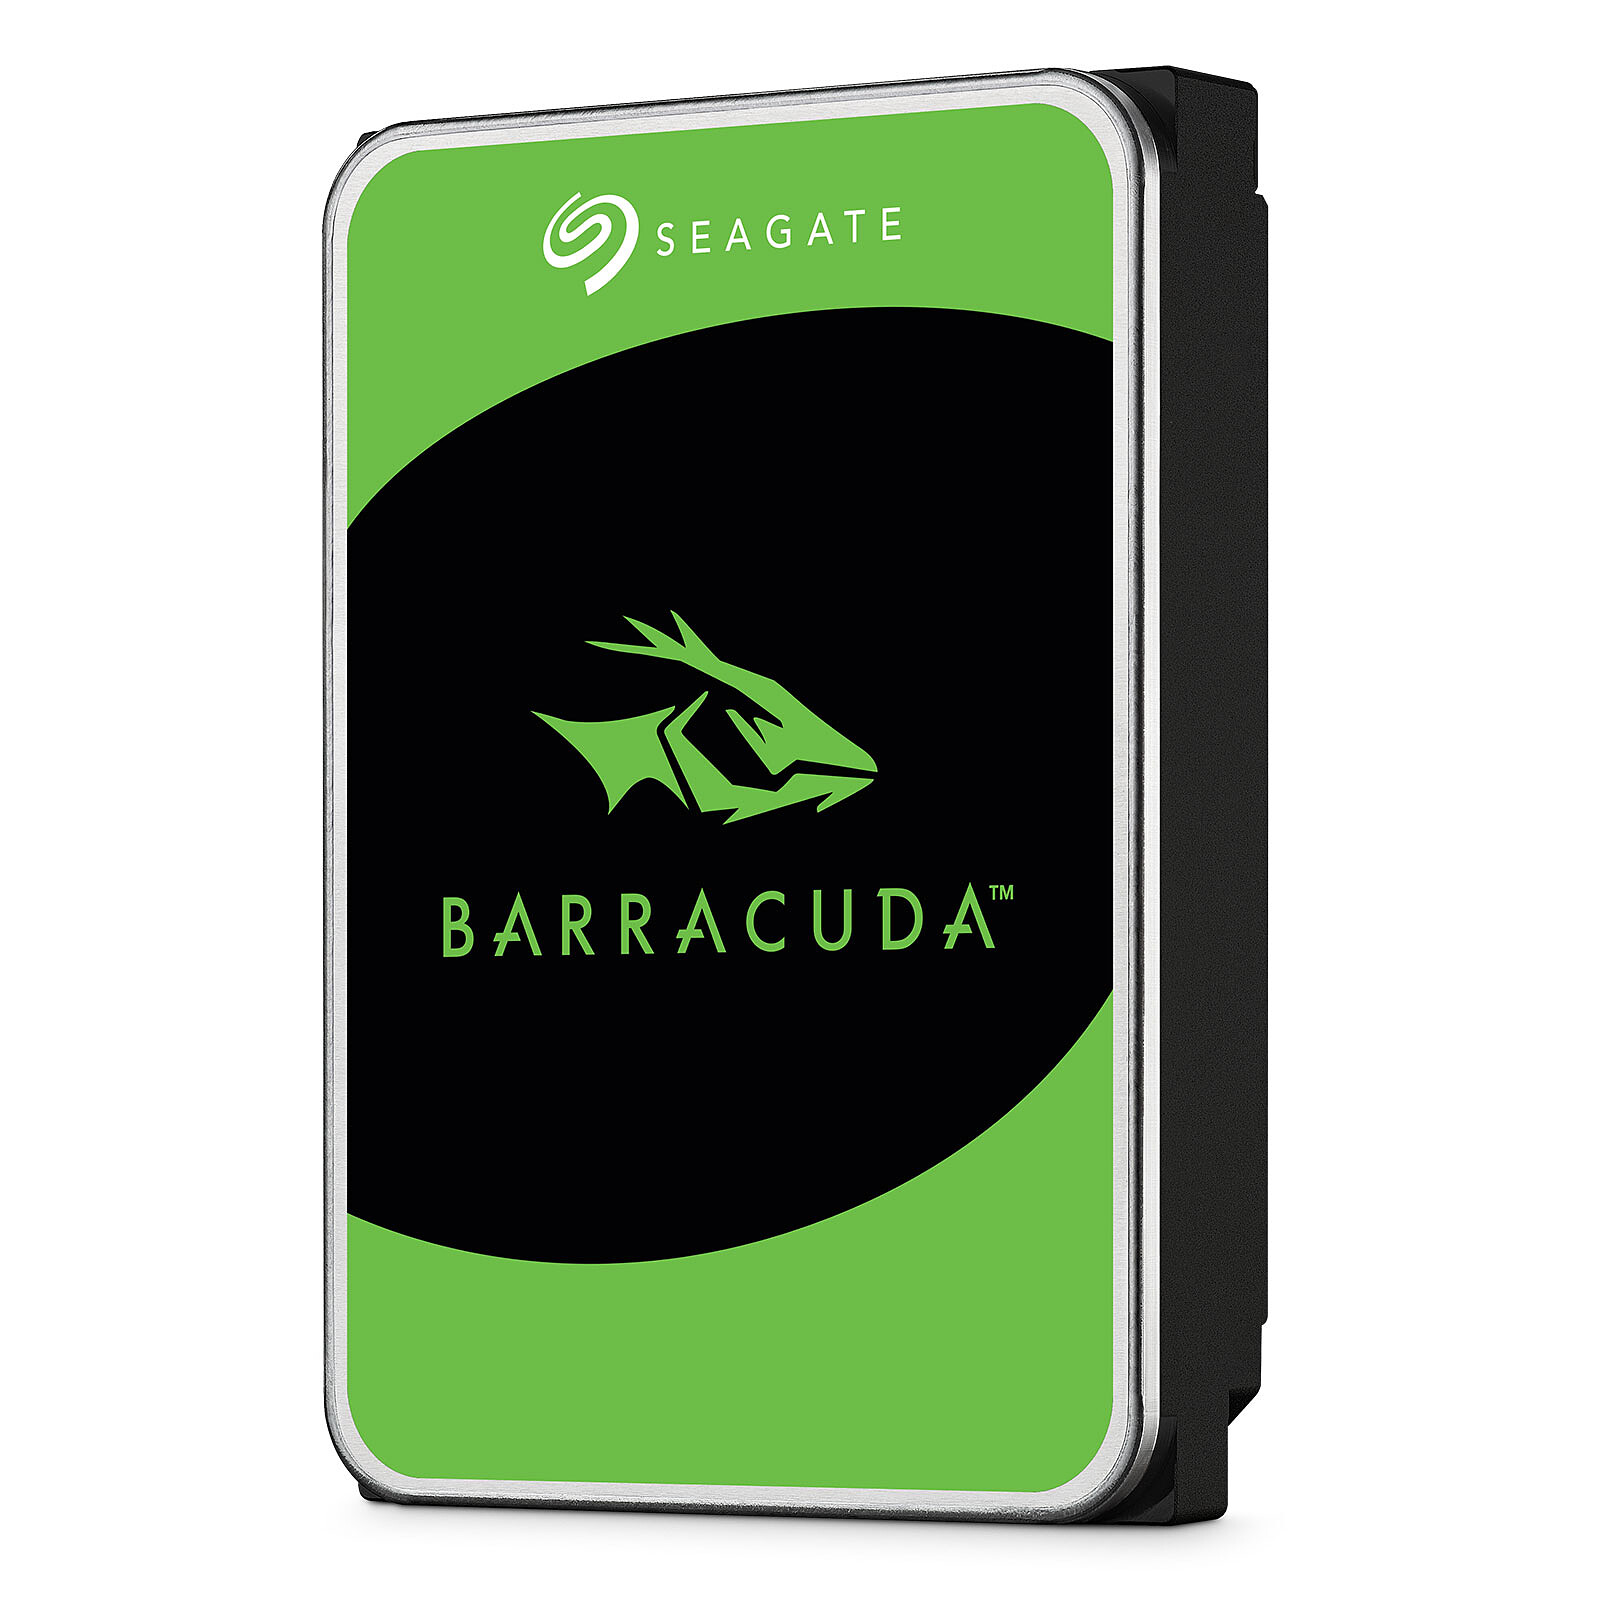 Seagate BarraCuda 2 TB (ST2000DM008) - Internal hard drive - LDLC 3-year  warranty